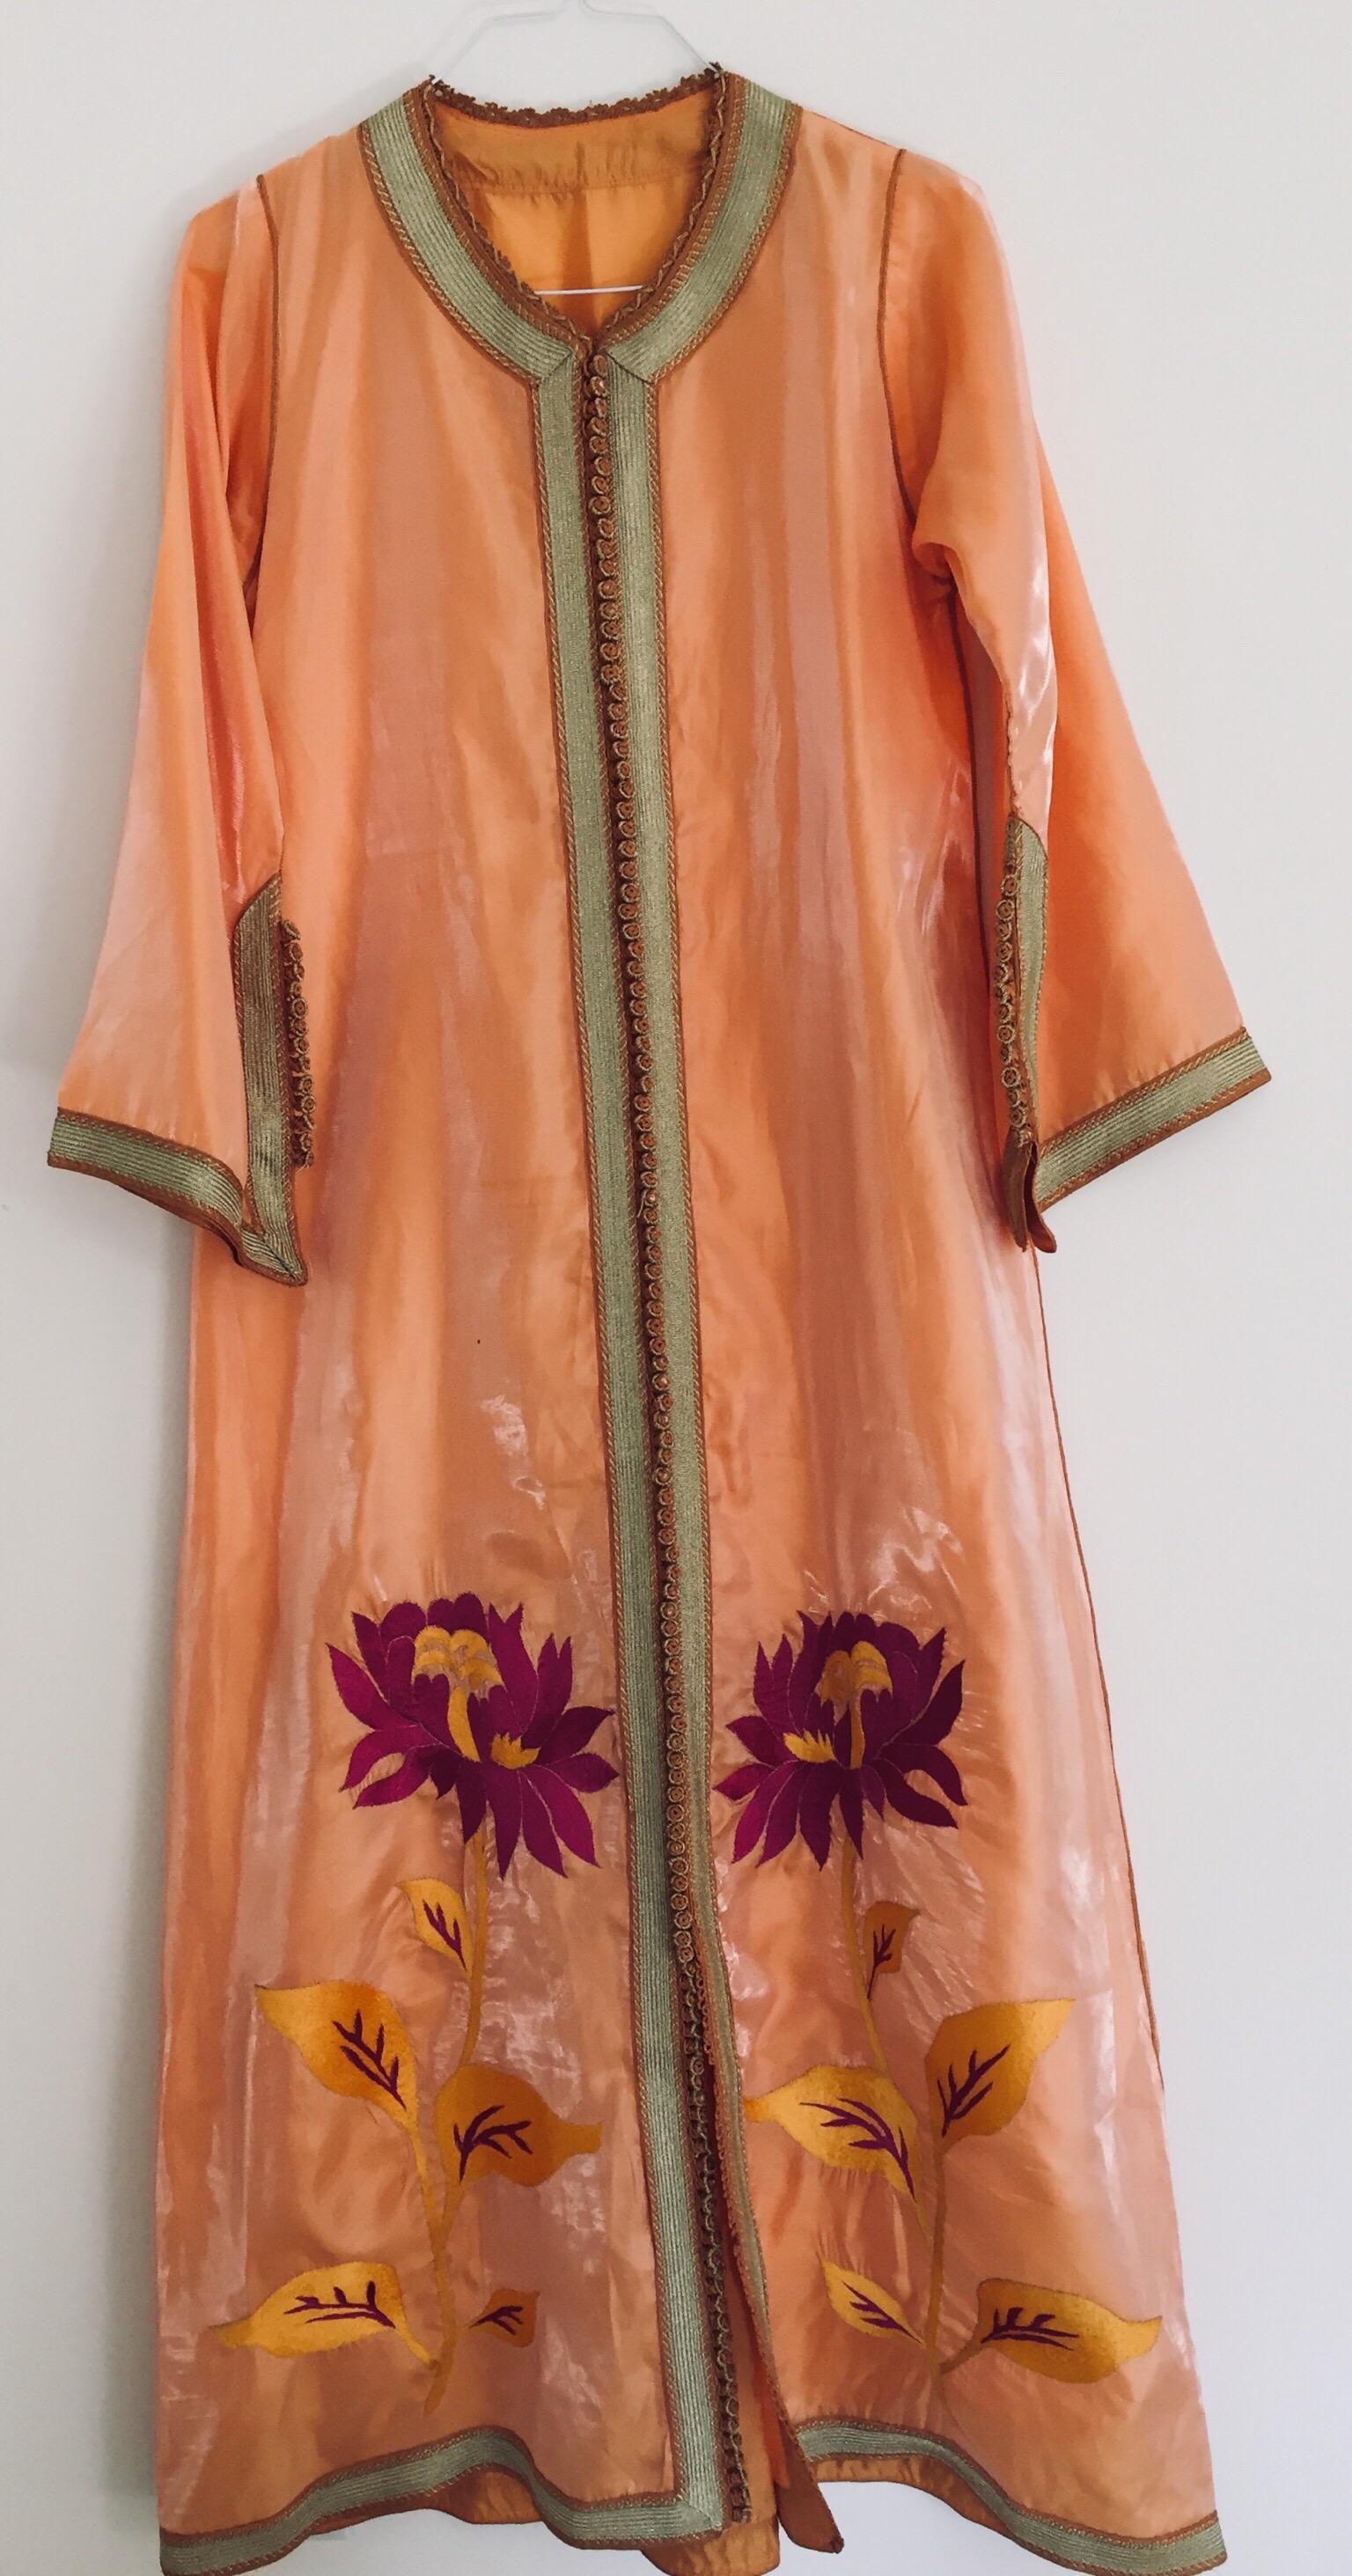 Moroccan Vintage Caftan 1970s Kaftan Maxi Dress Orange with Floral Embroideries 6